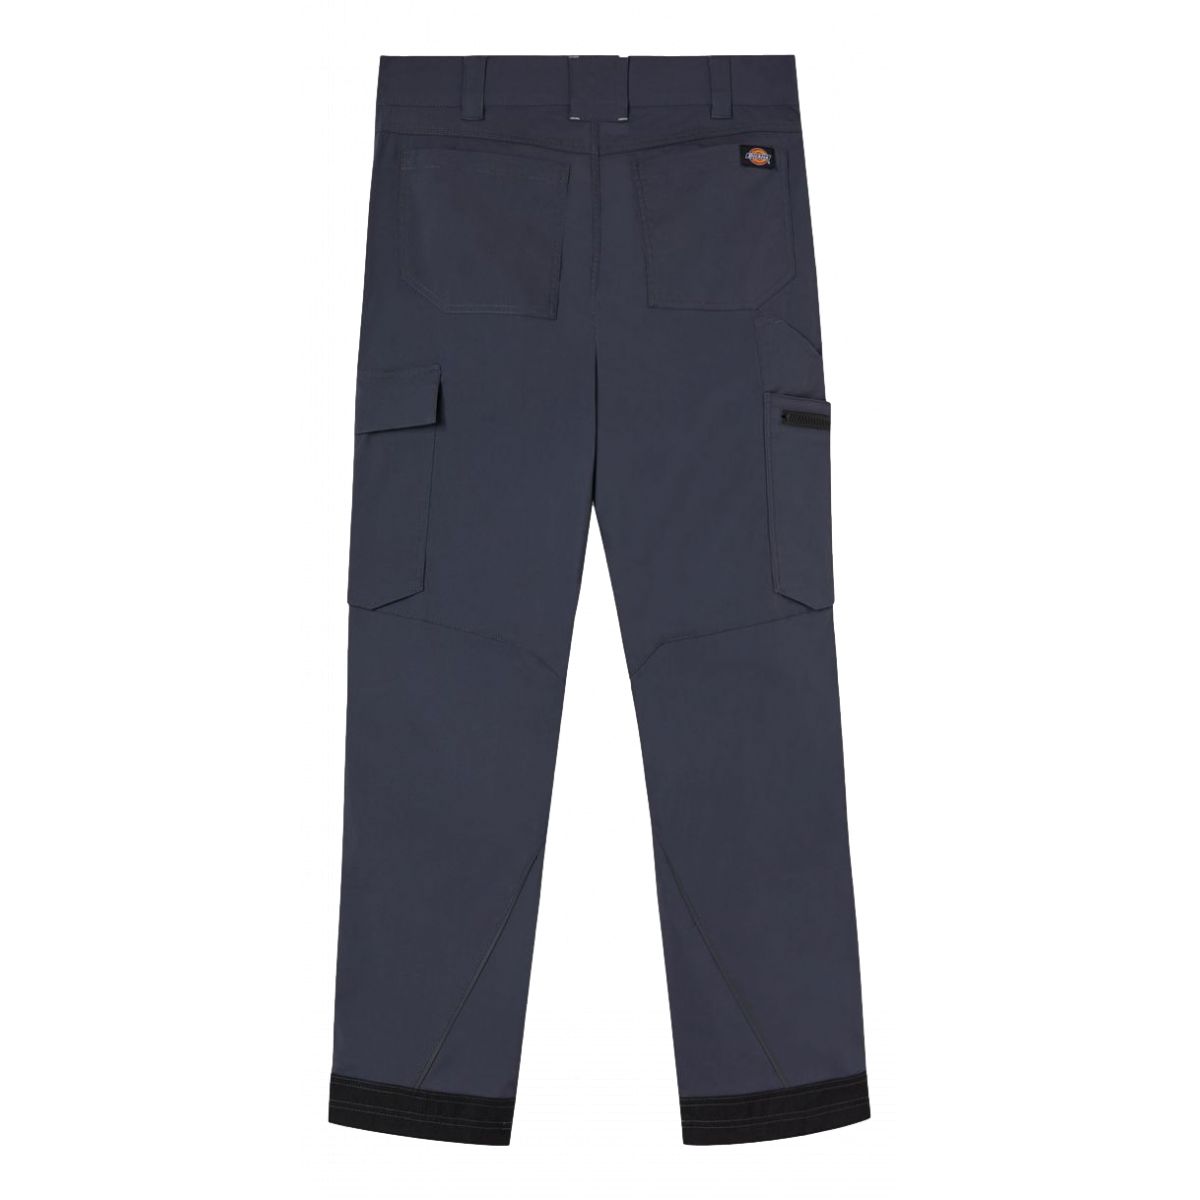 Pantalon léger Flex Gris - Dickies - Taille 38 1